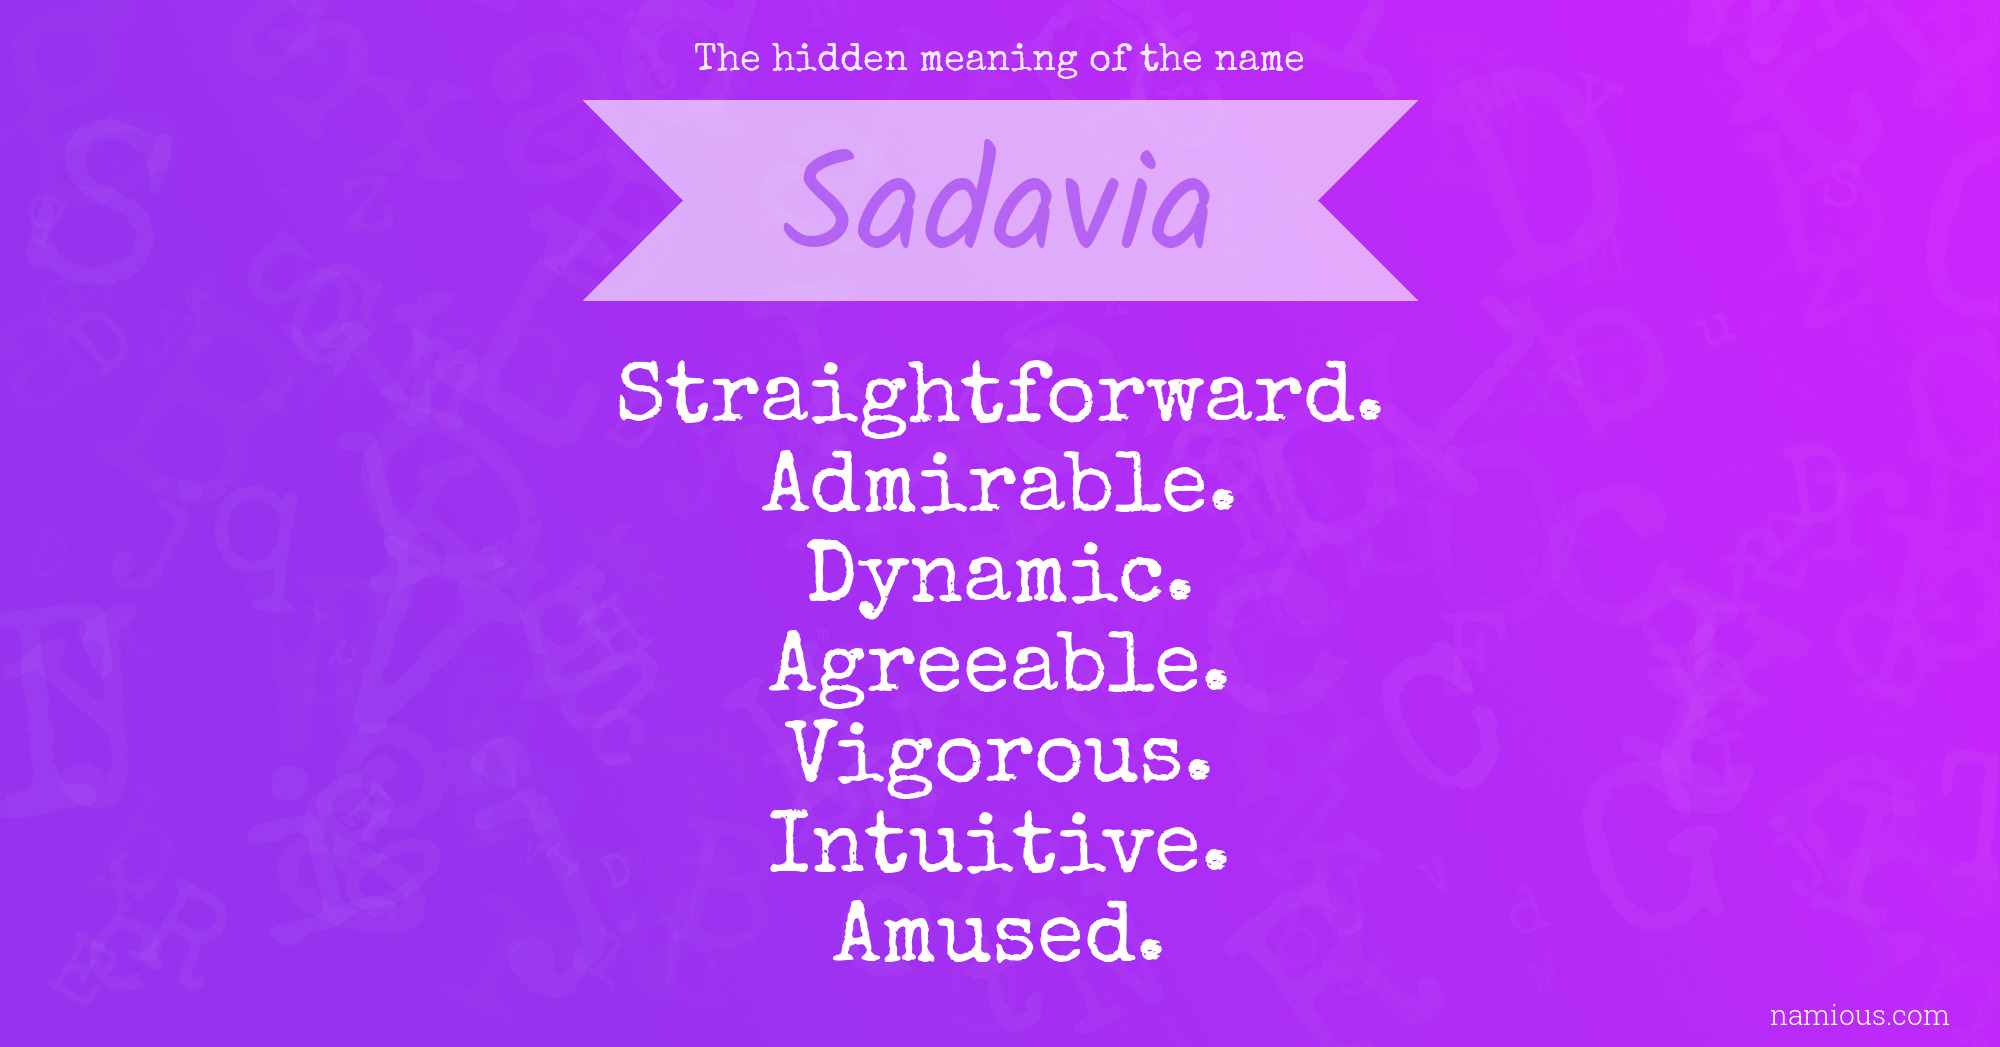 The hidden meaning of the name Sadavia